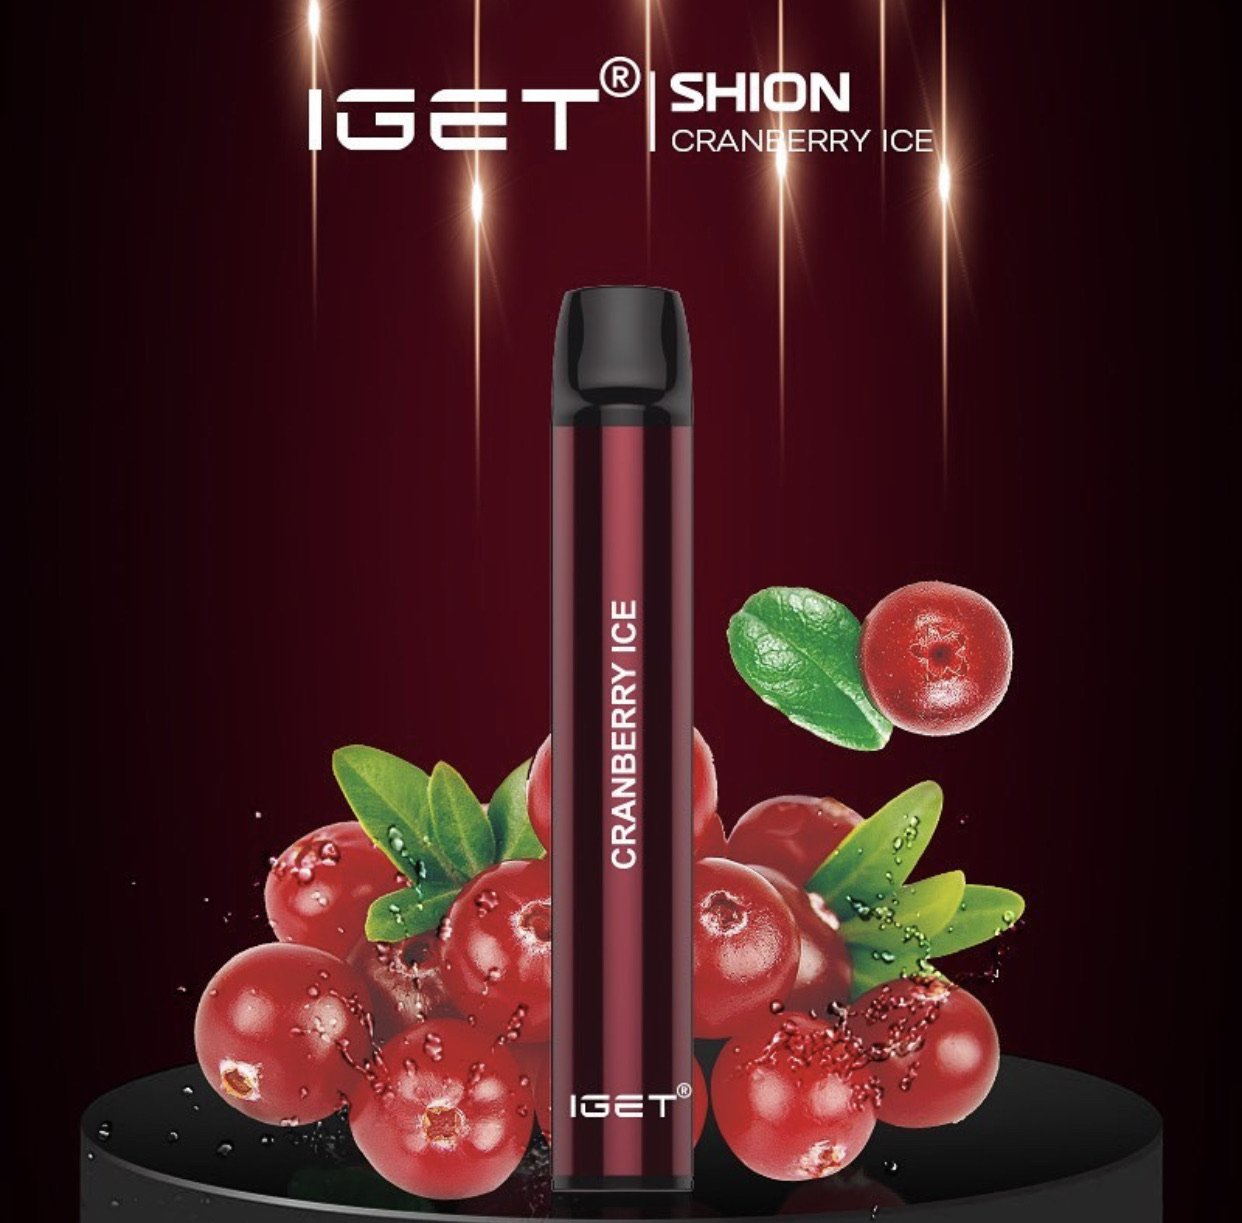 cranberry-ice-iget-shion-1.jpg